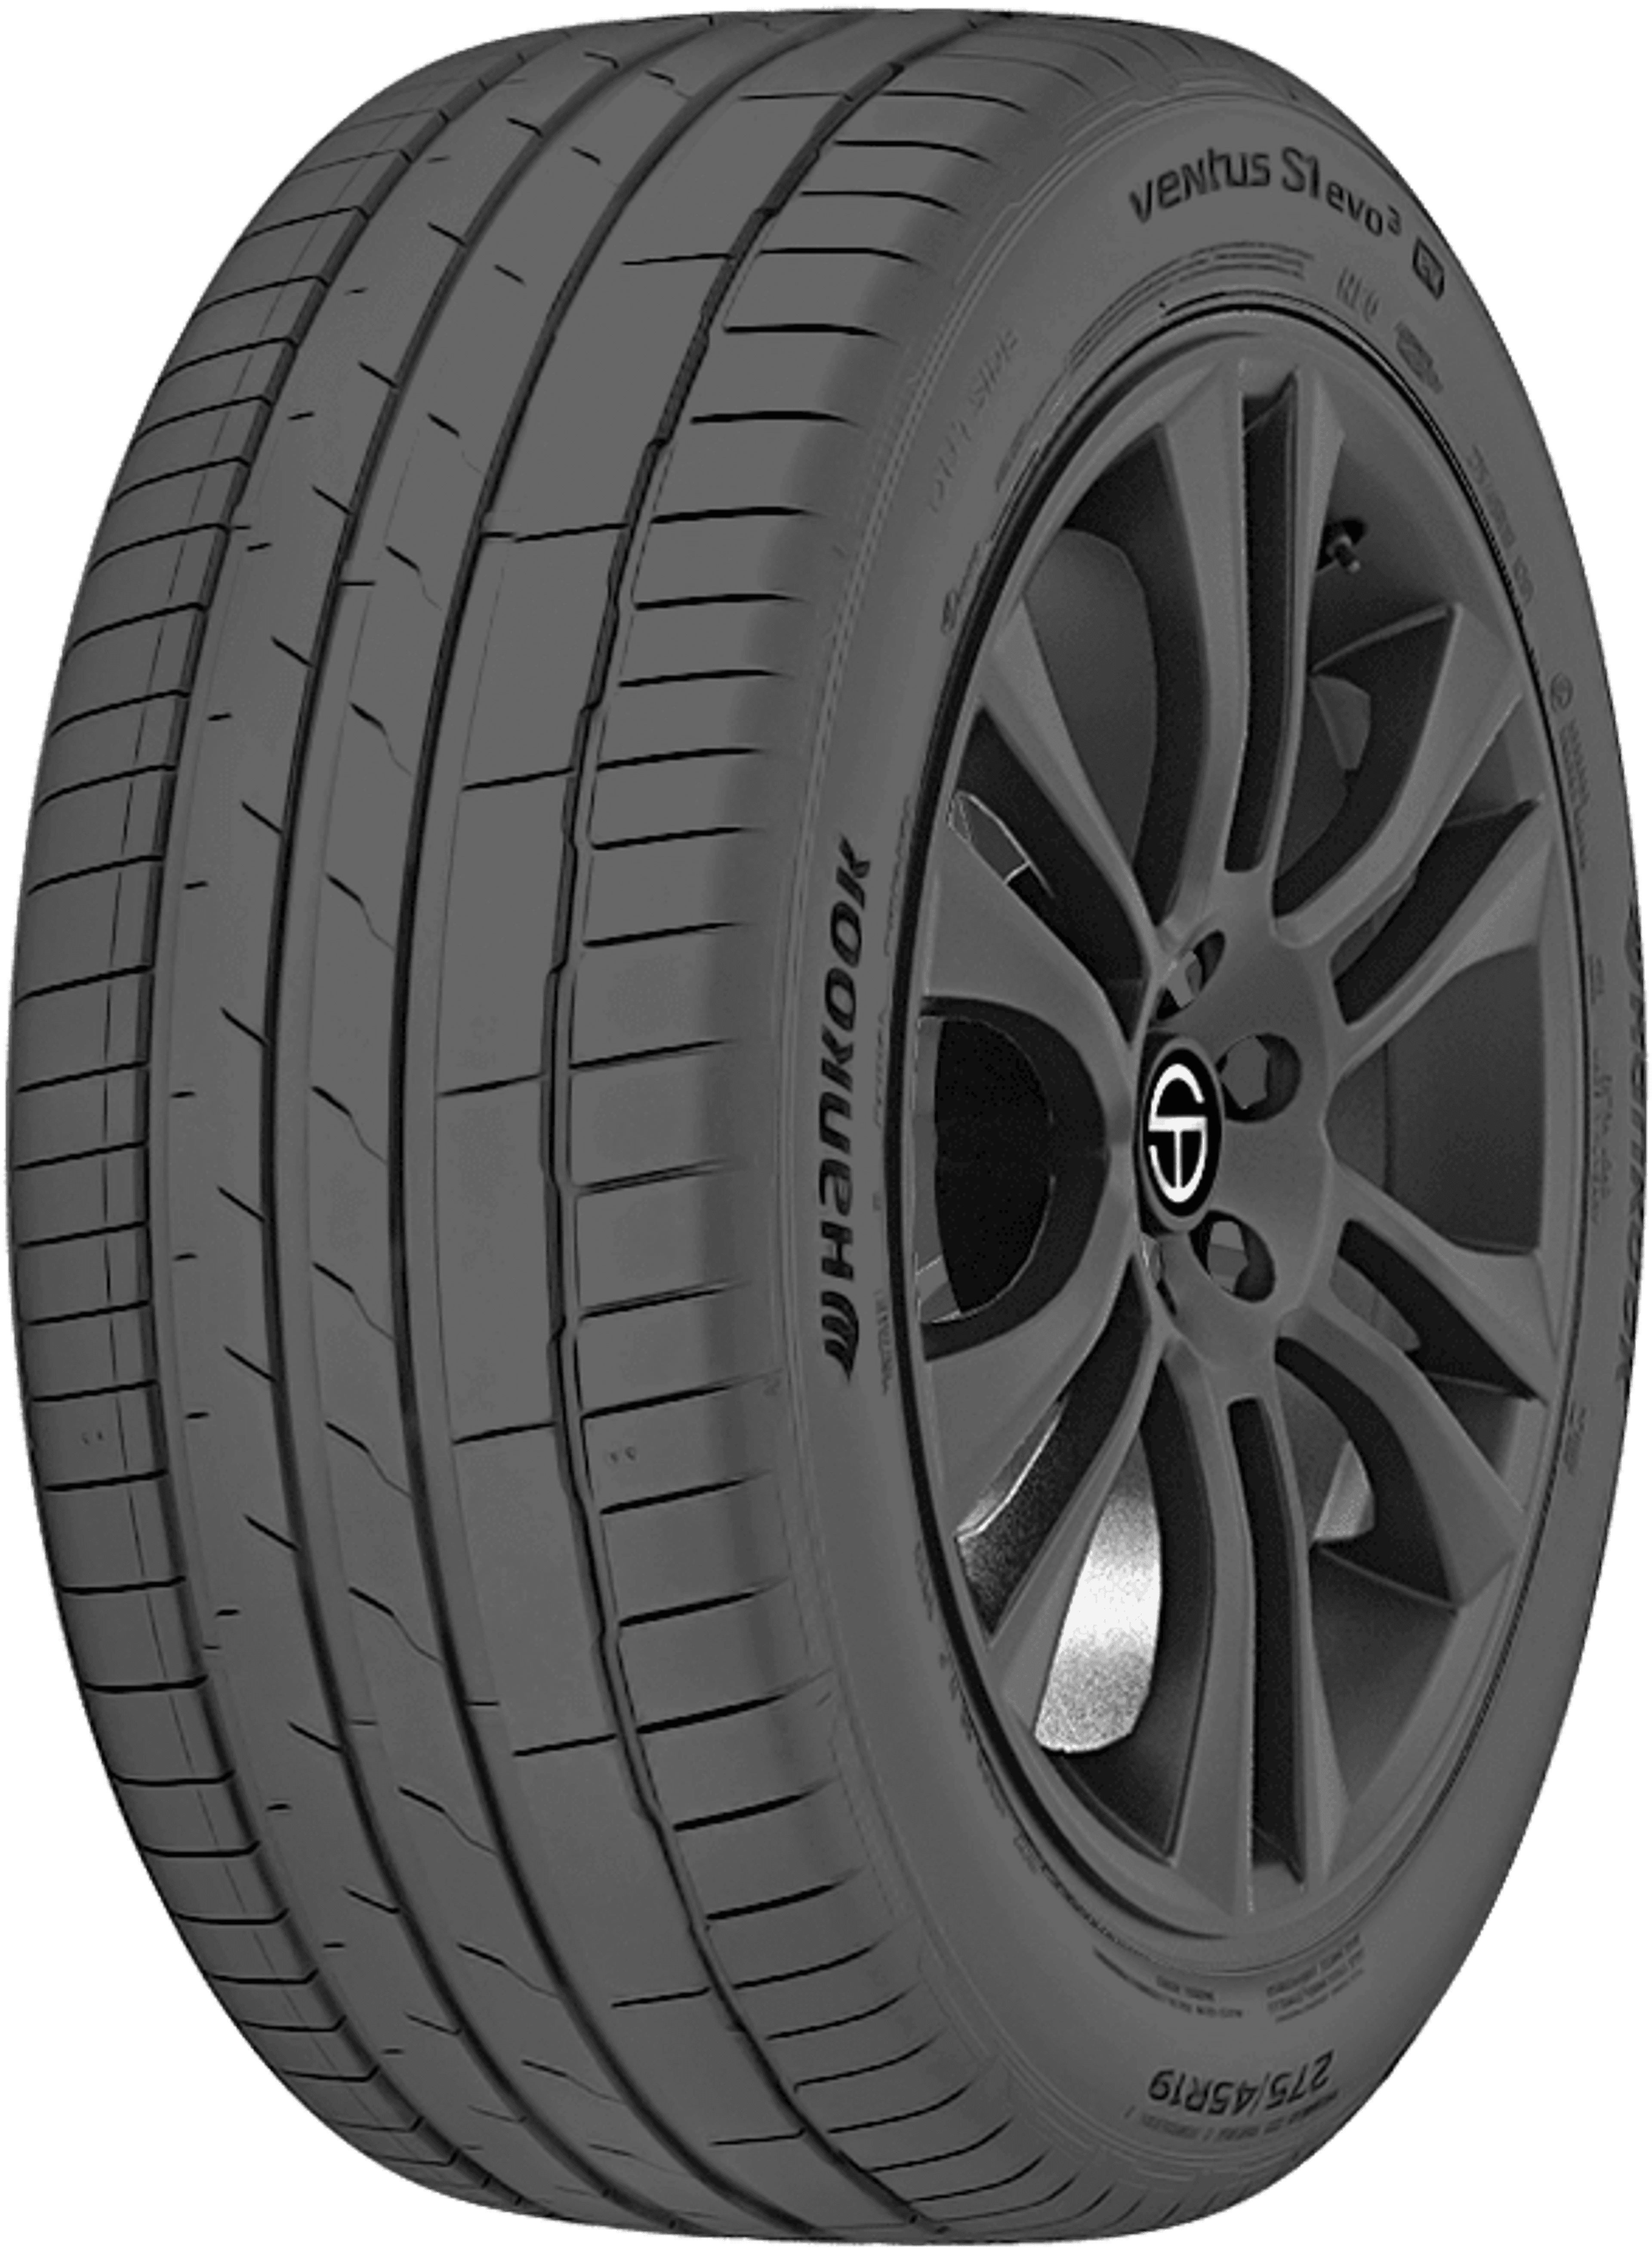 Buy Hankook Ventus SimpleTire Tires Online | S1 (K127) evo3